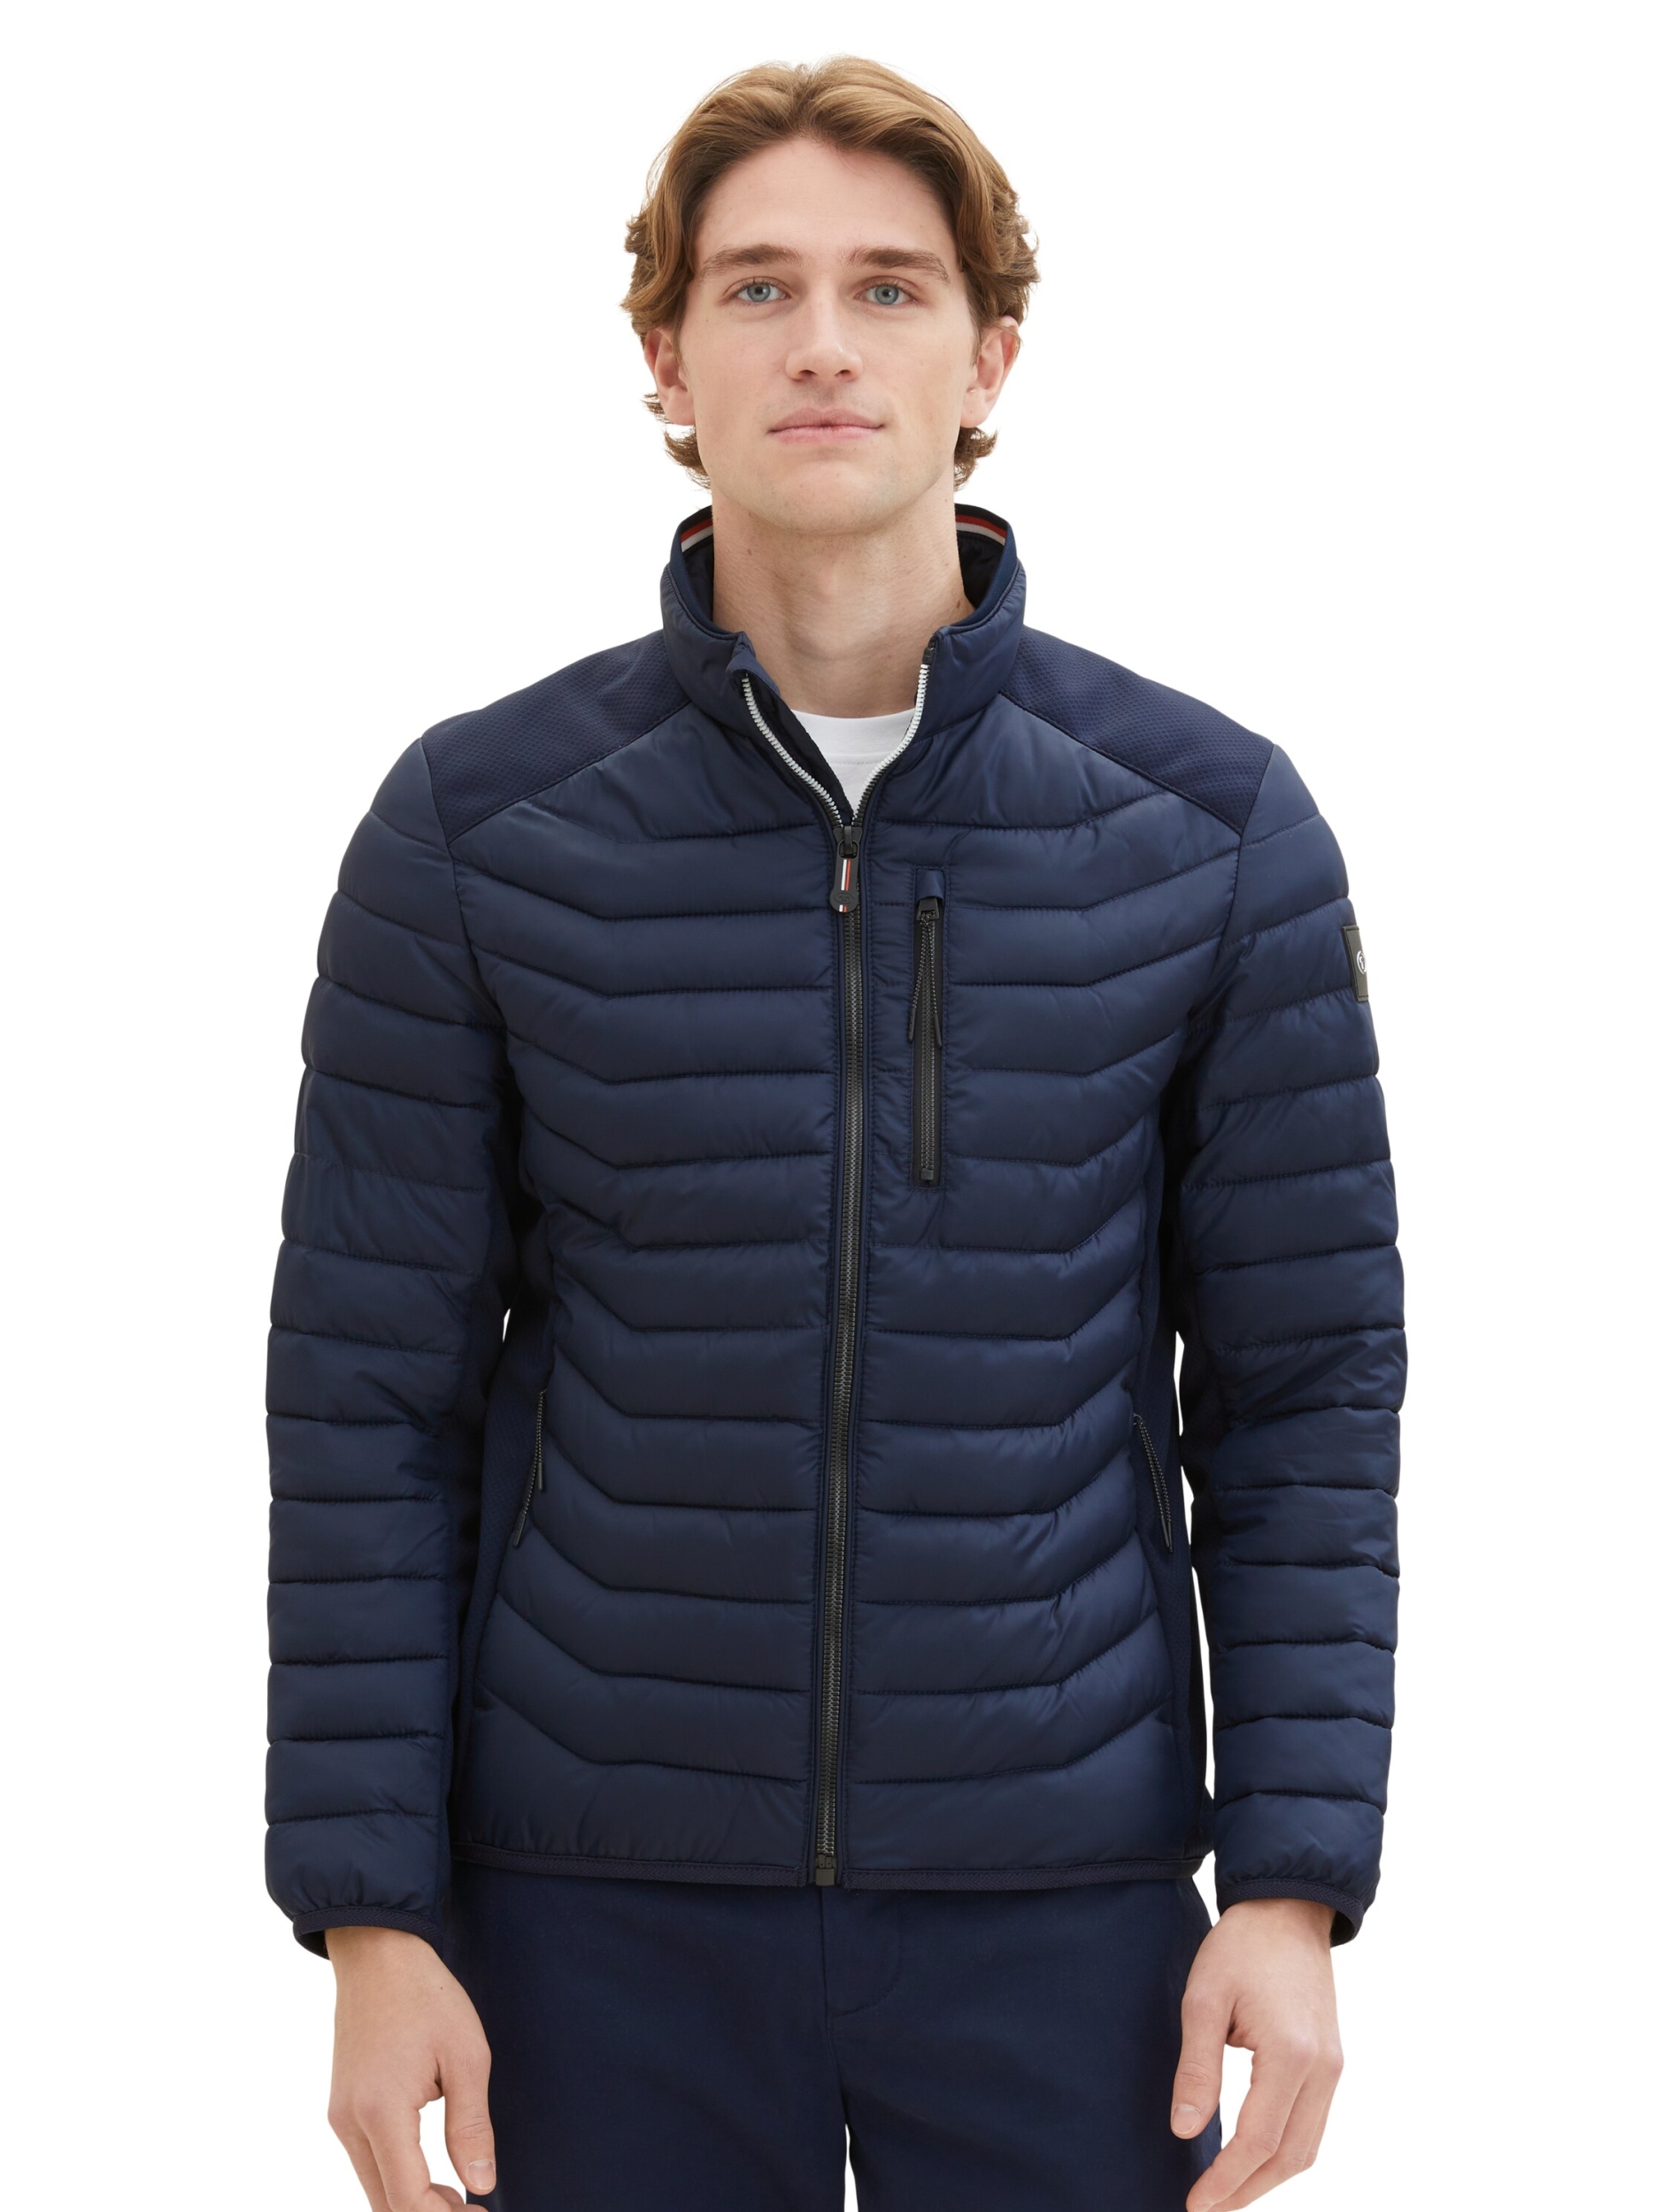 TOM hybrid online TAILOR jacket kaufen